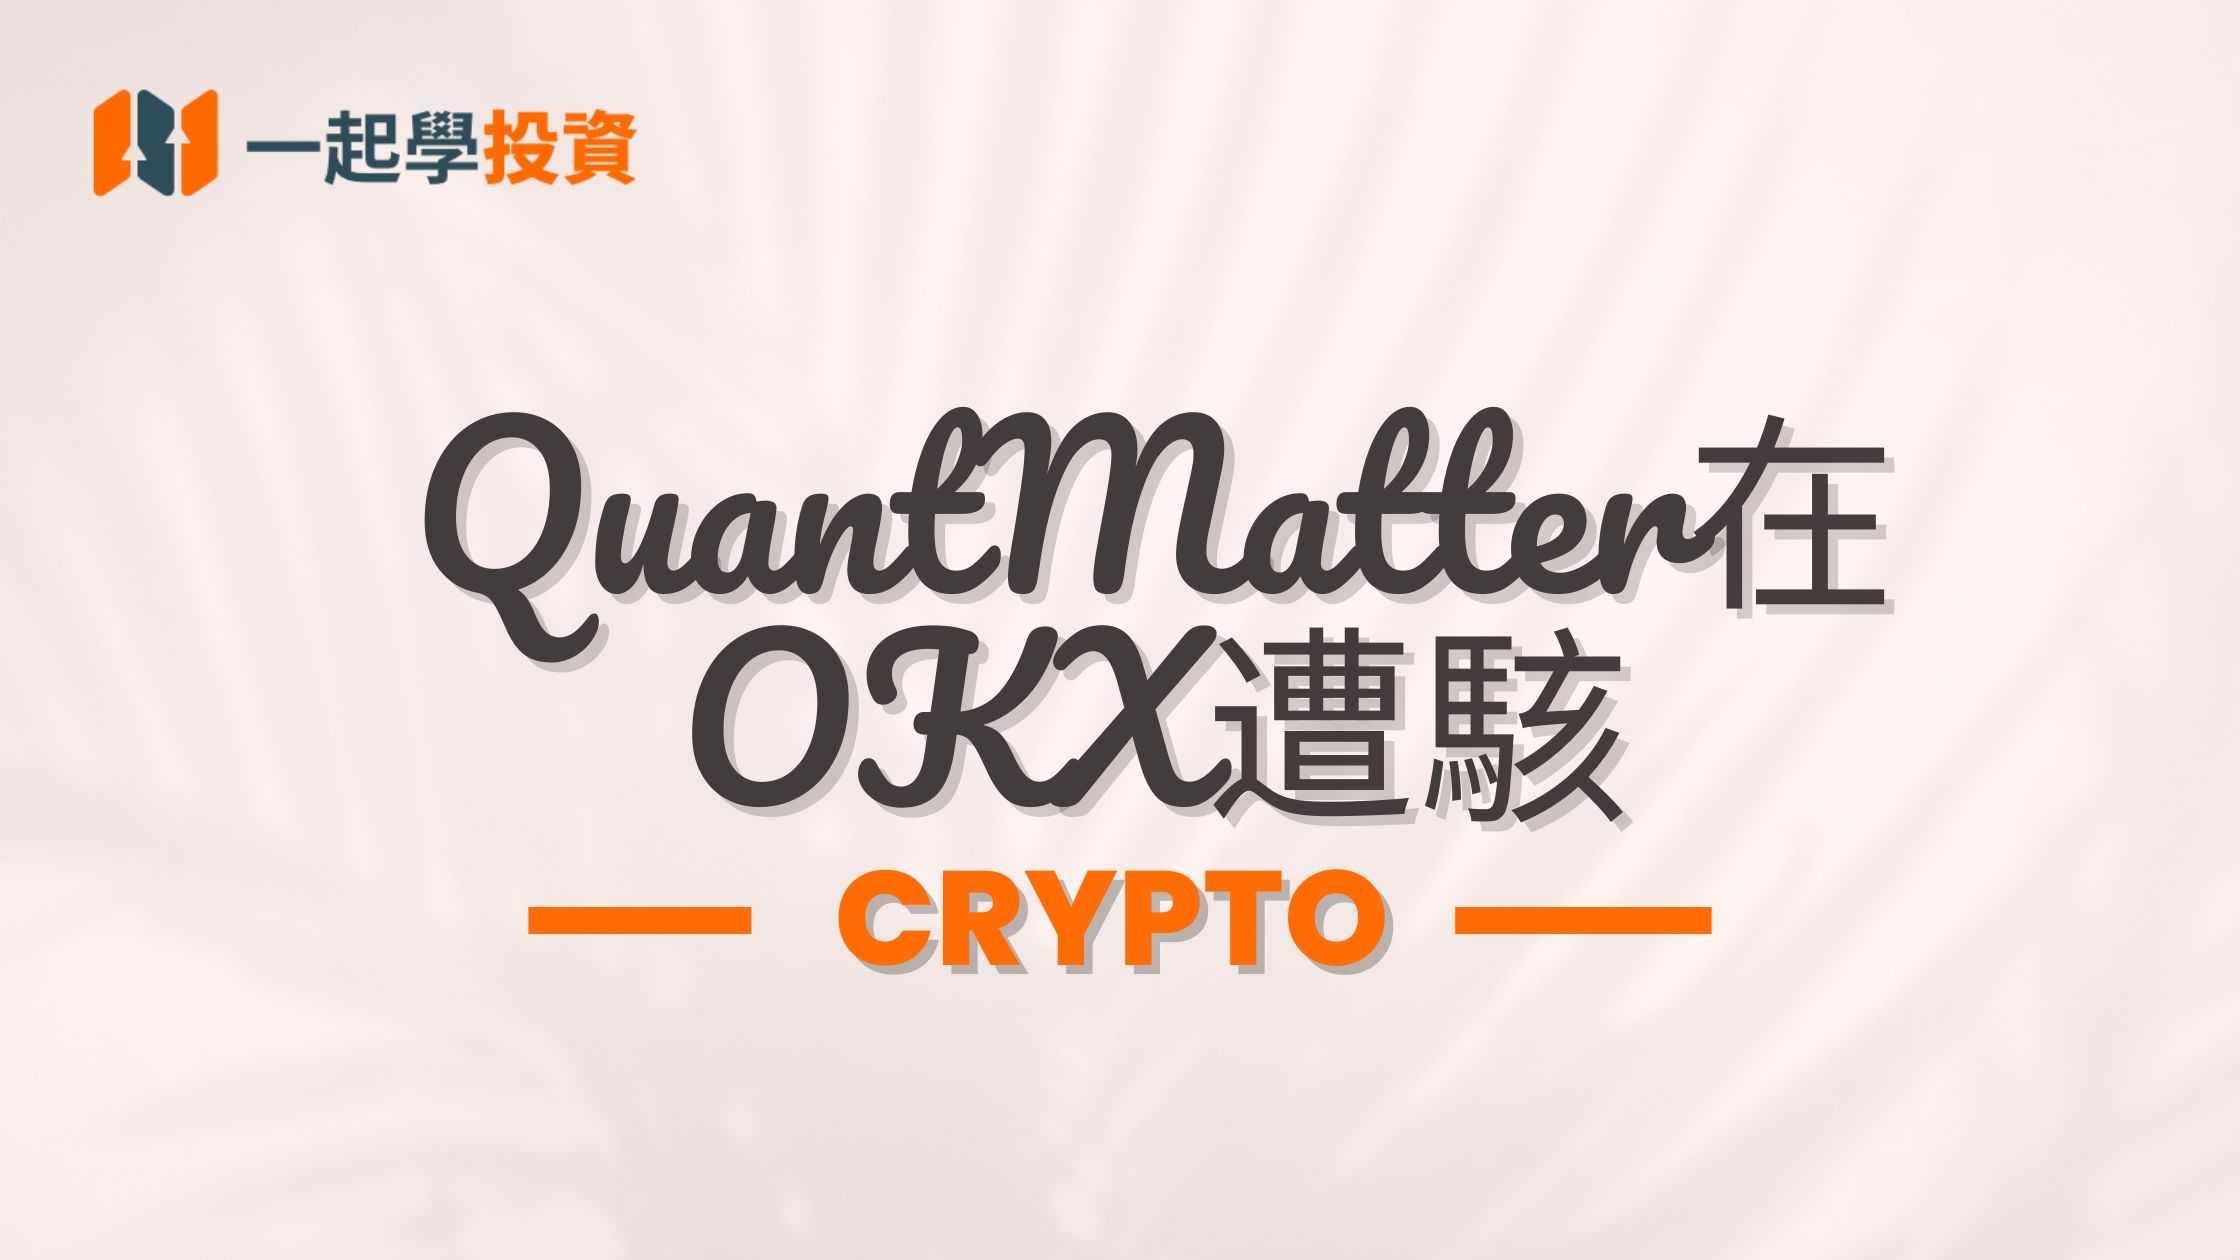 QuantMatter在OKX遭駭：駭客劫持帳戶盜取1100萬美元